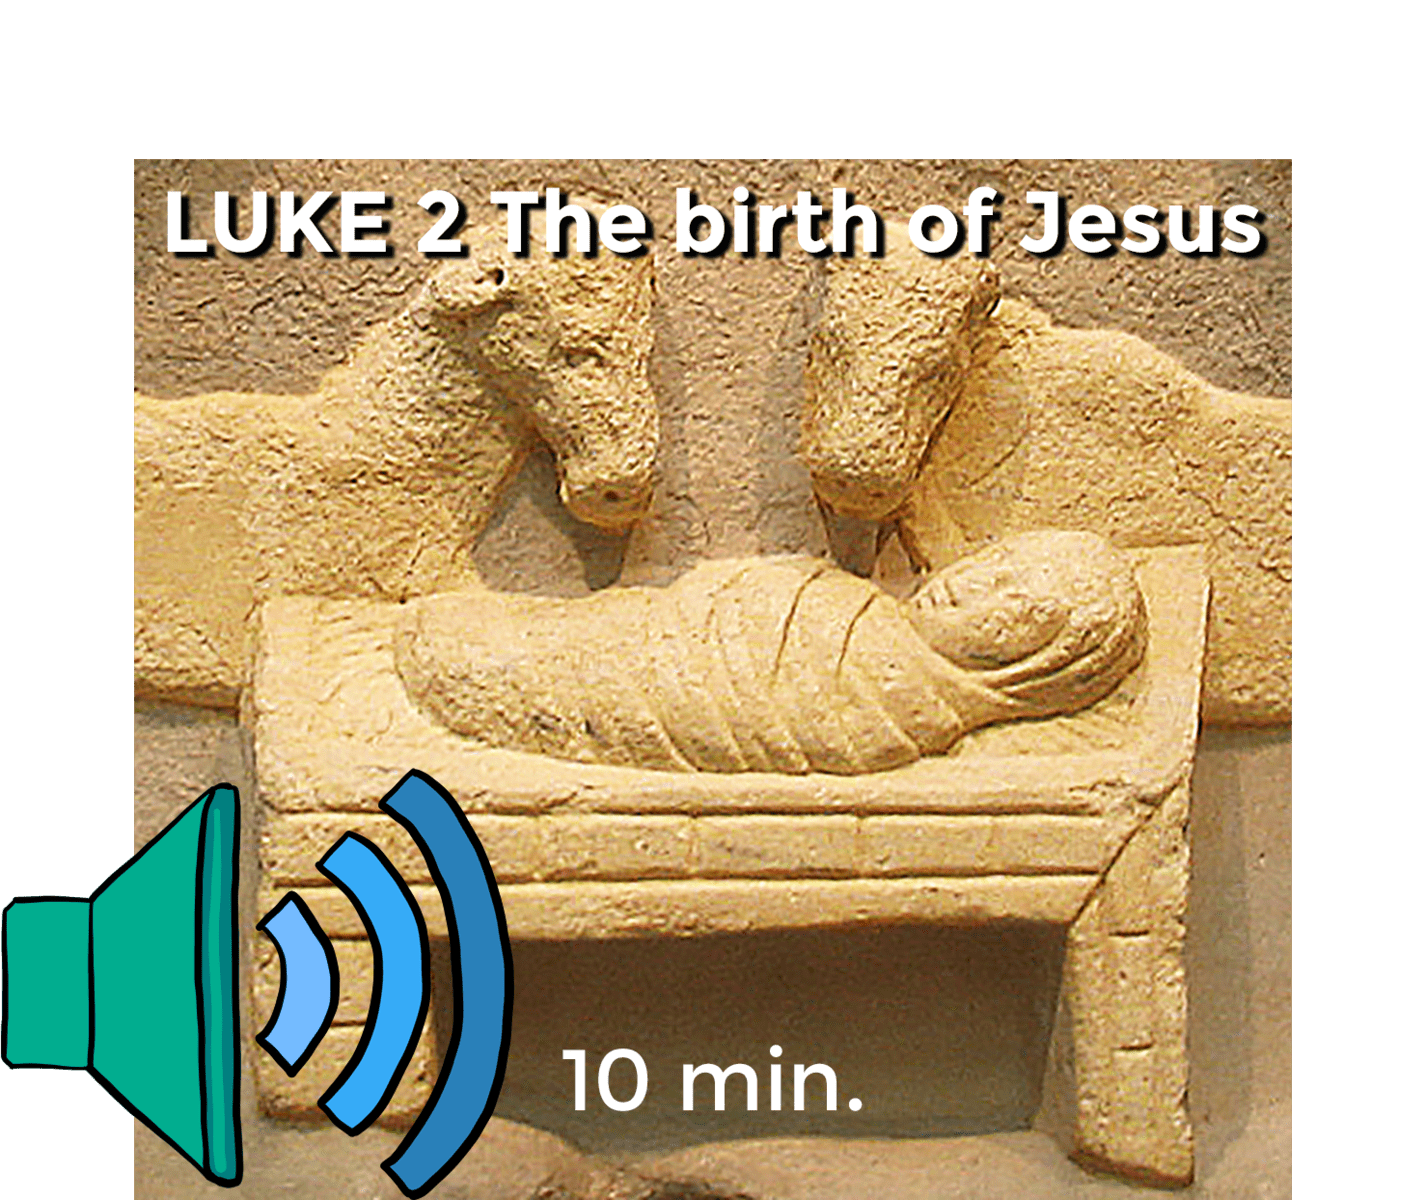 video: Audio file, Luke 2, the birth and childhood of Jesus